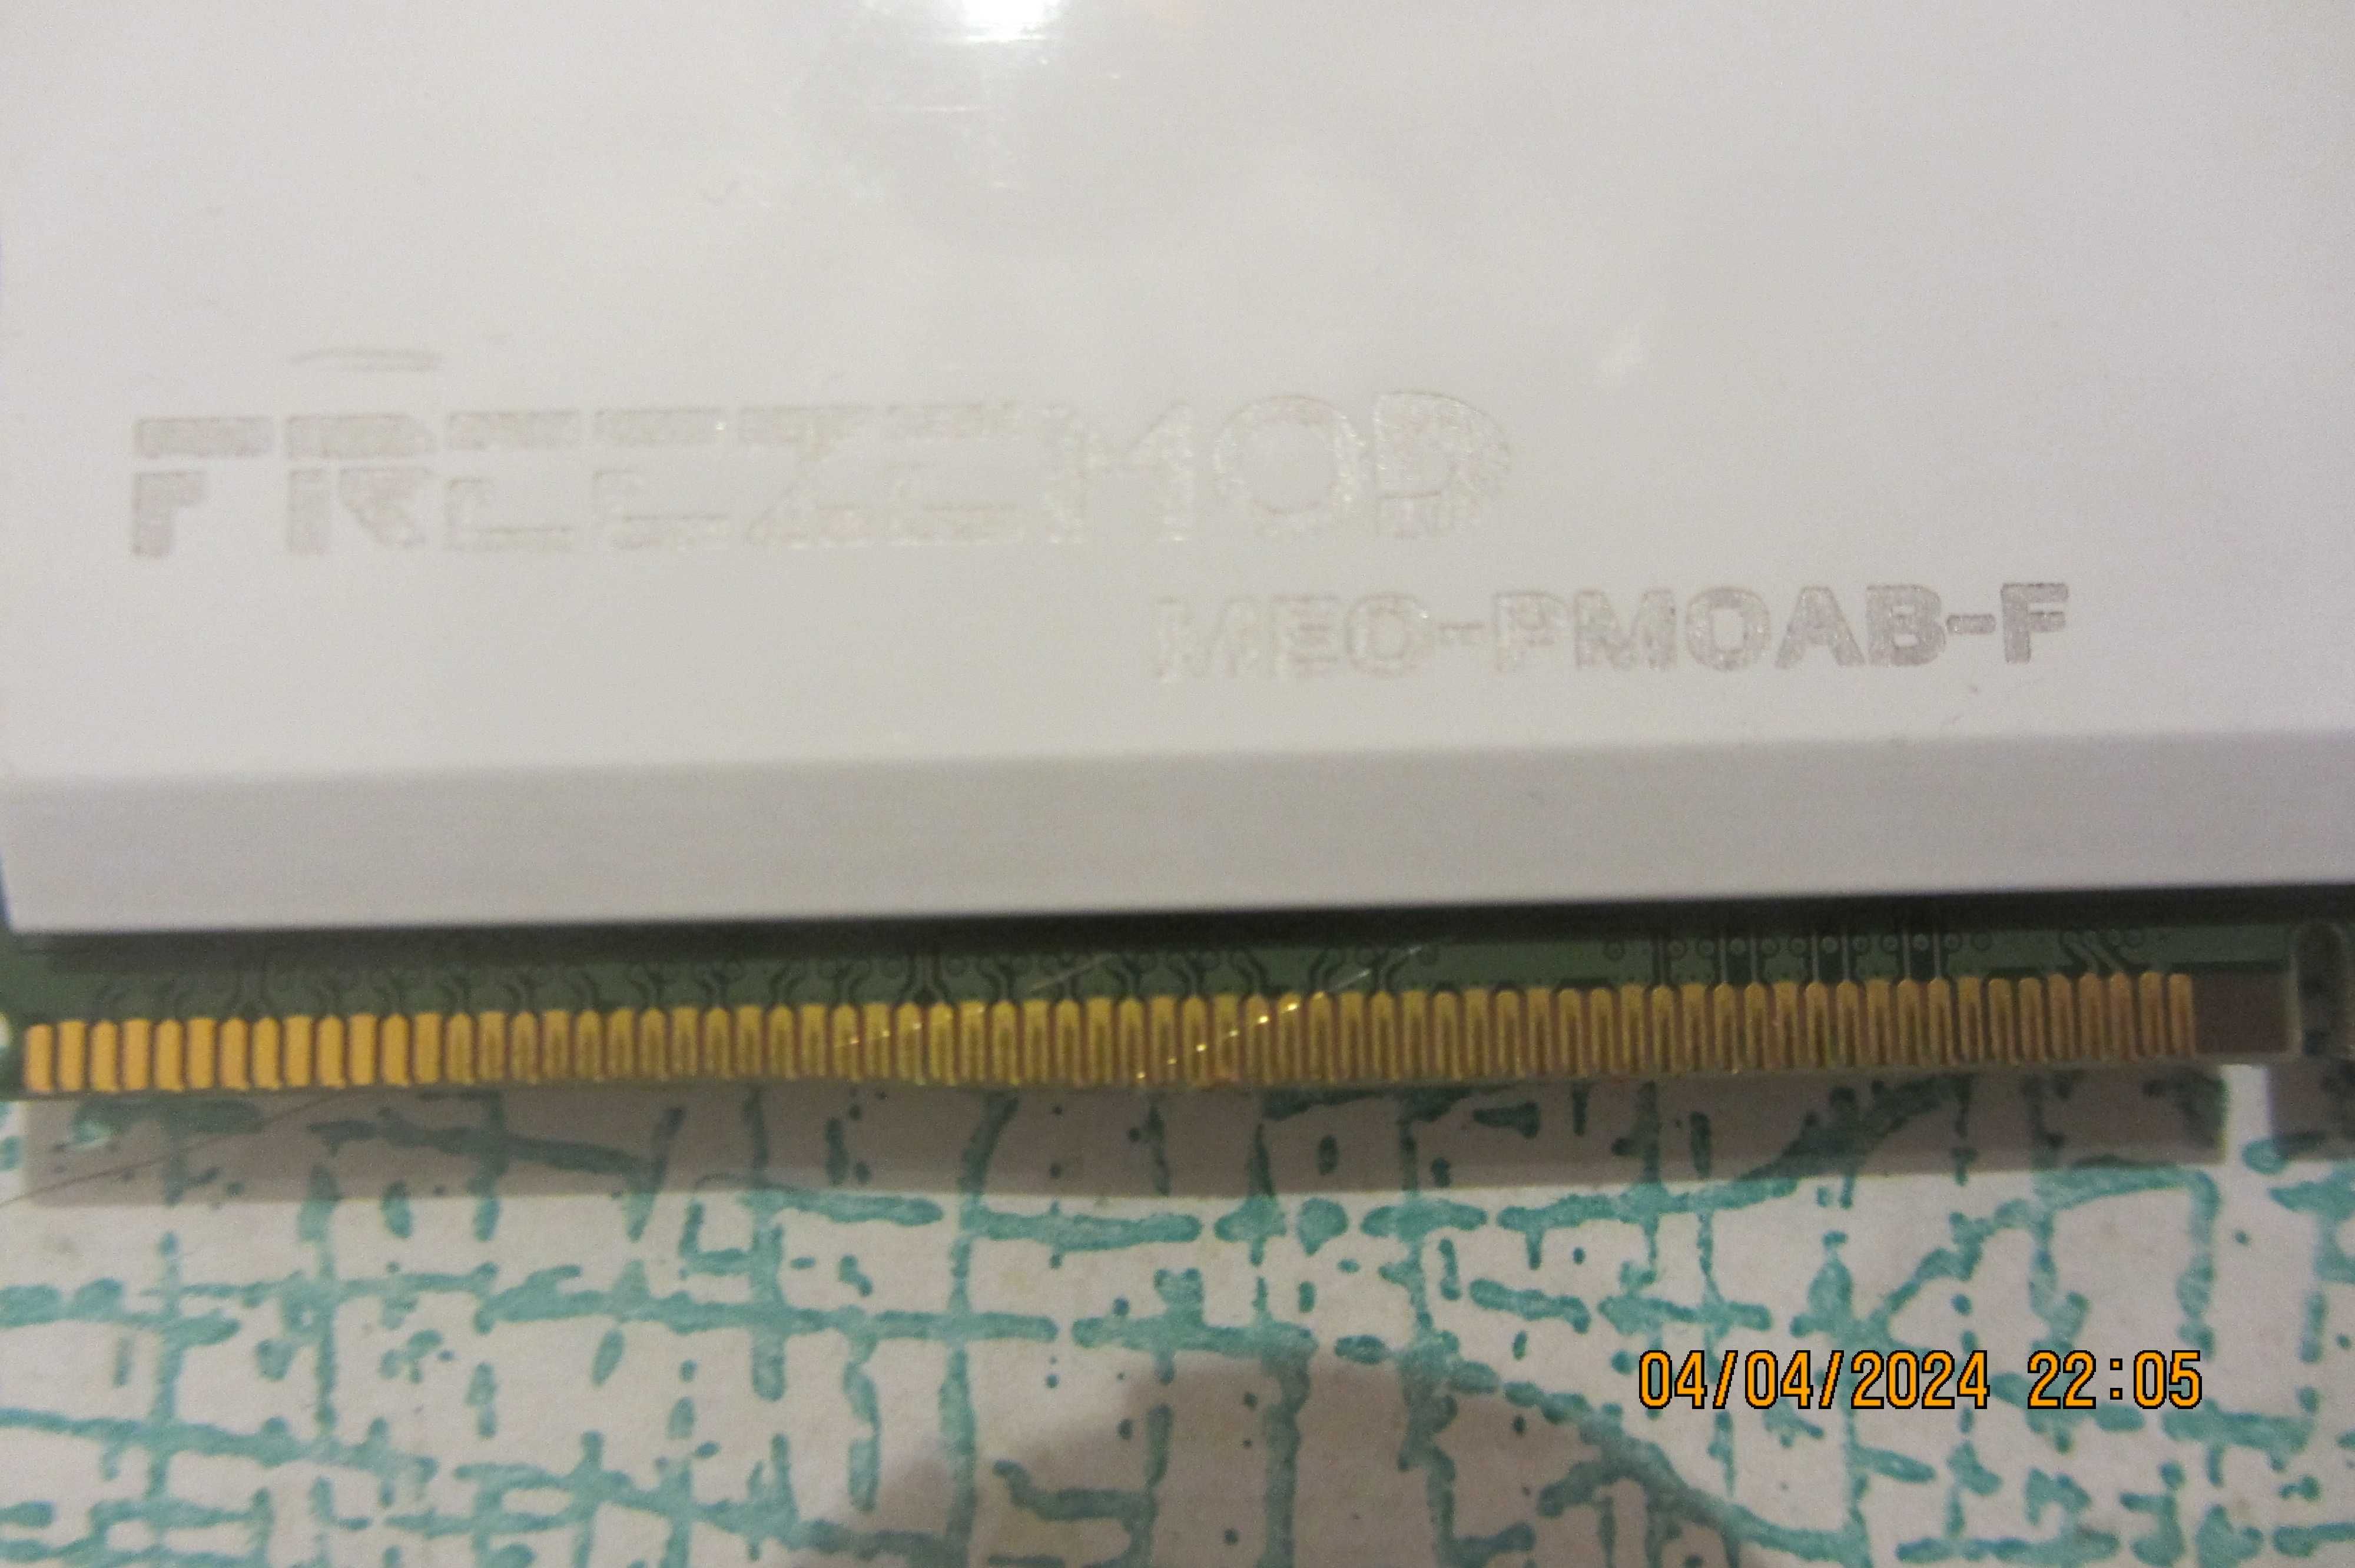 Оперативна пам'ять Samsung DDR5 M323R2GA3BB0-CQKOL  16 Гб планка.